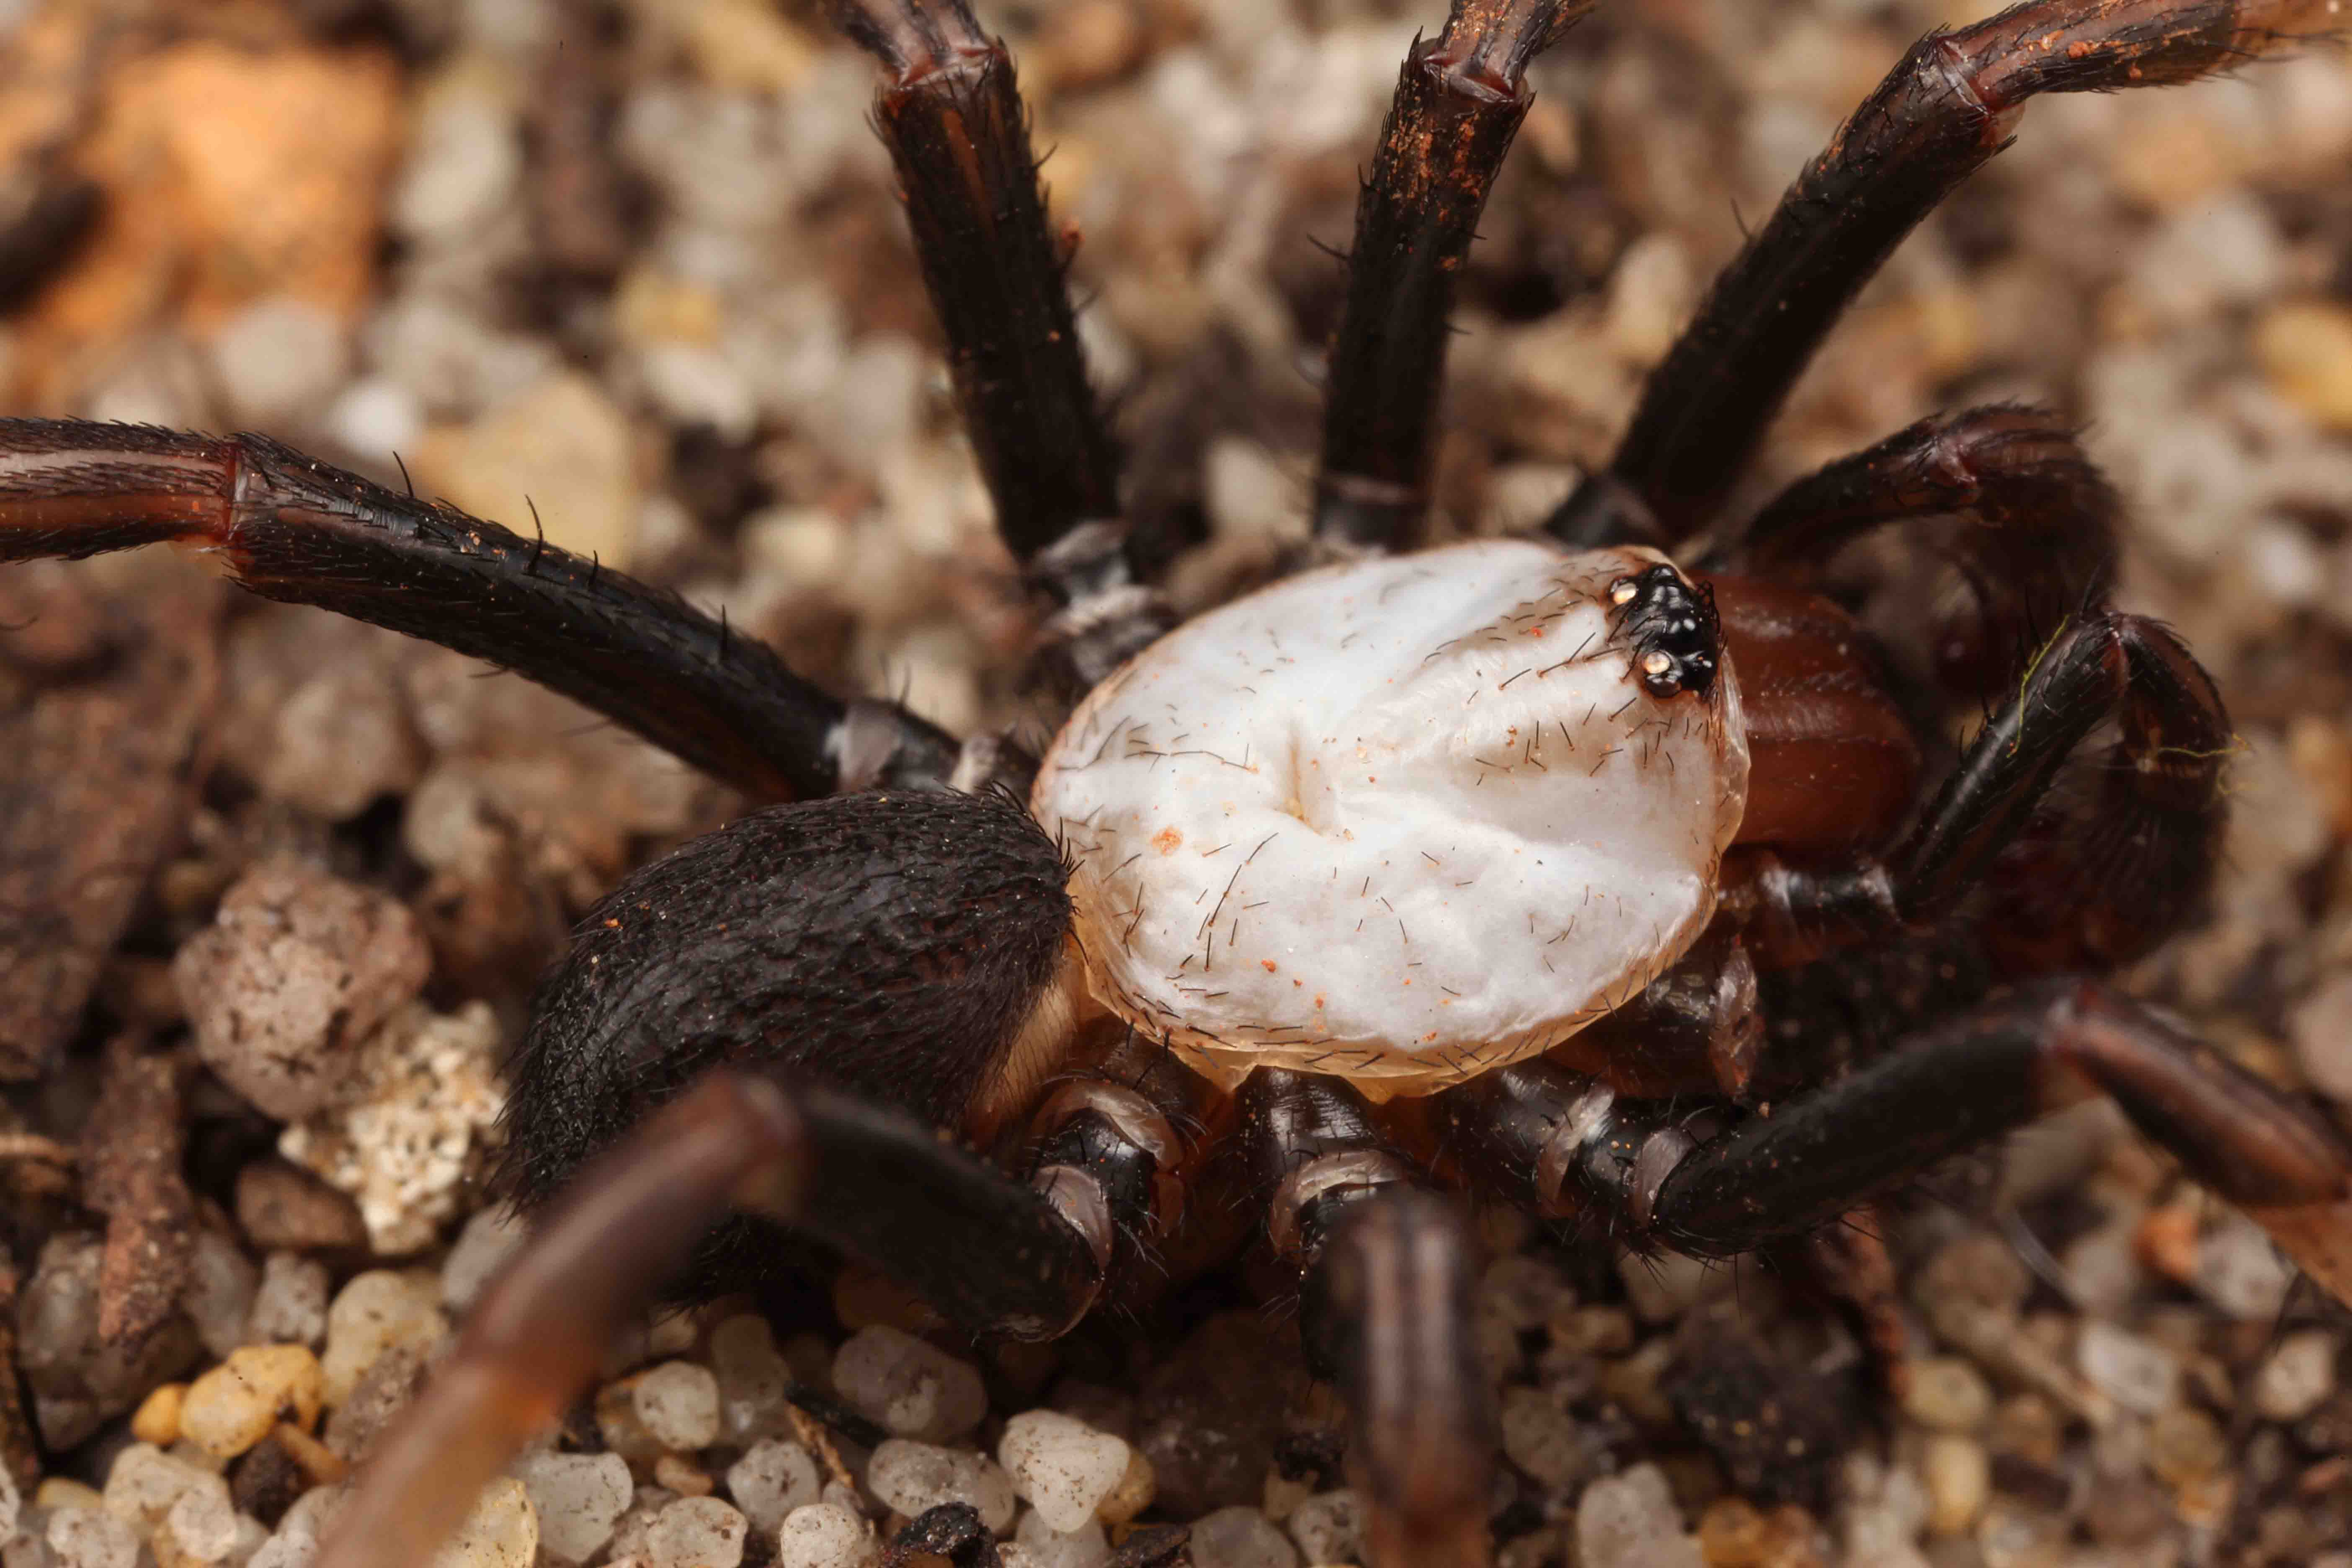 Super-size trapdoor spider discovered in Australia